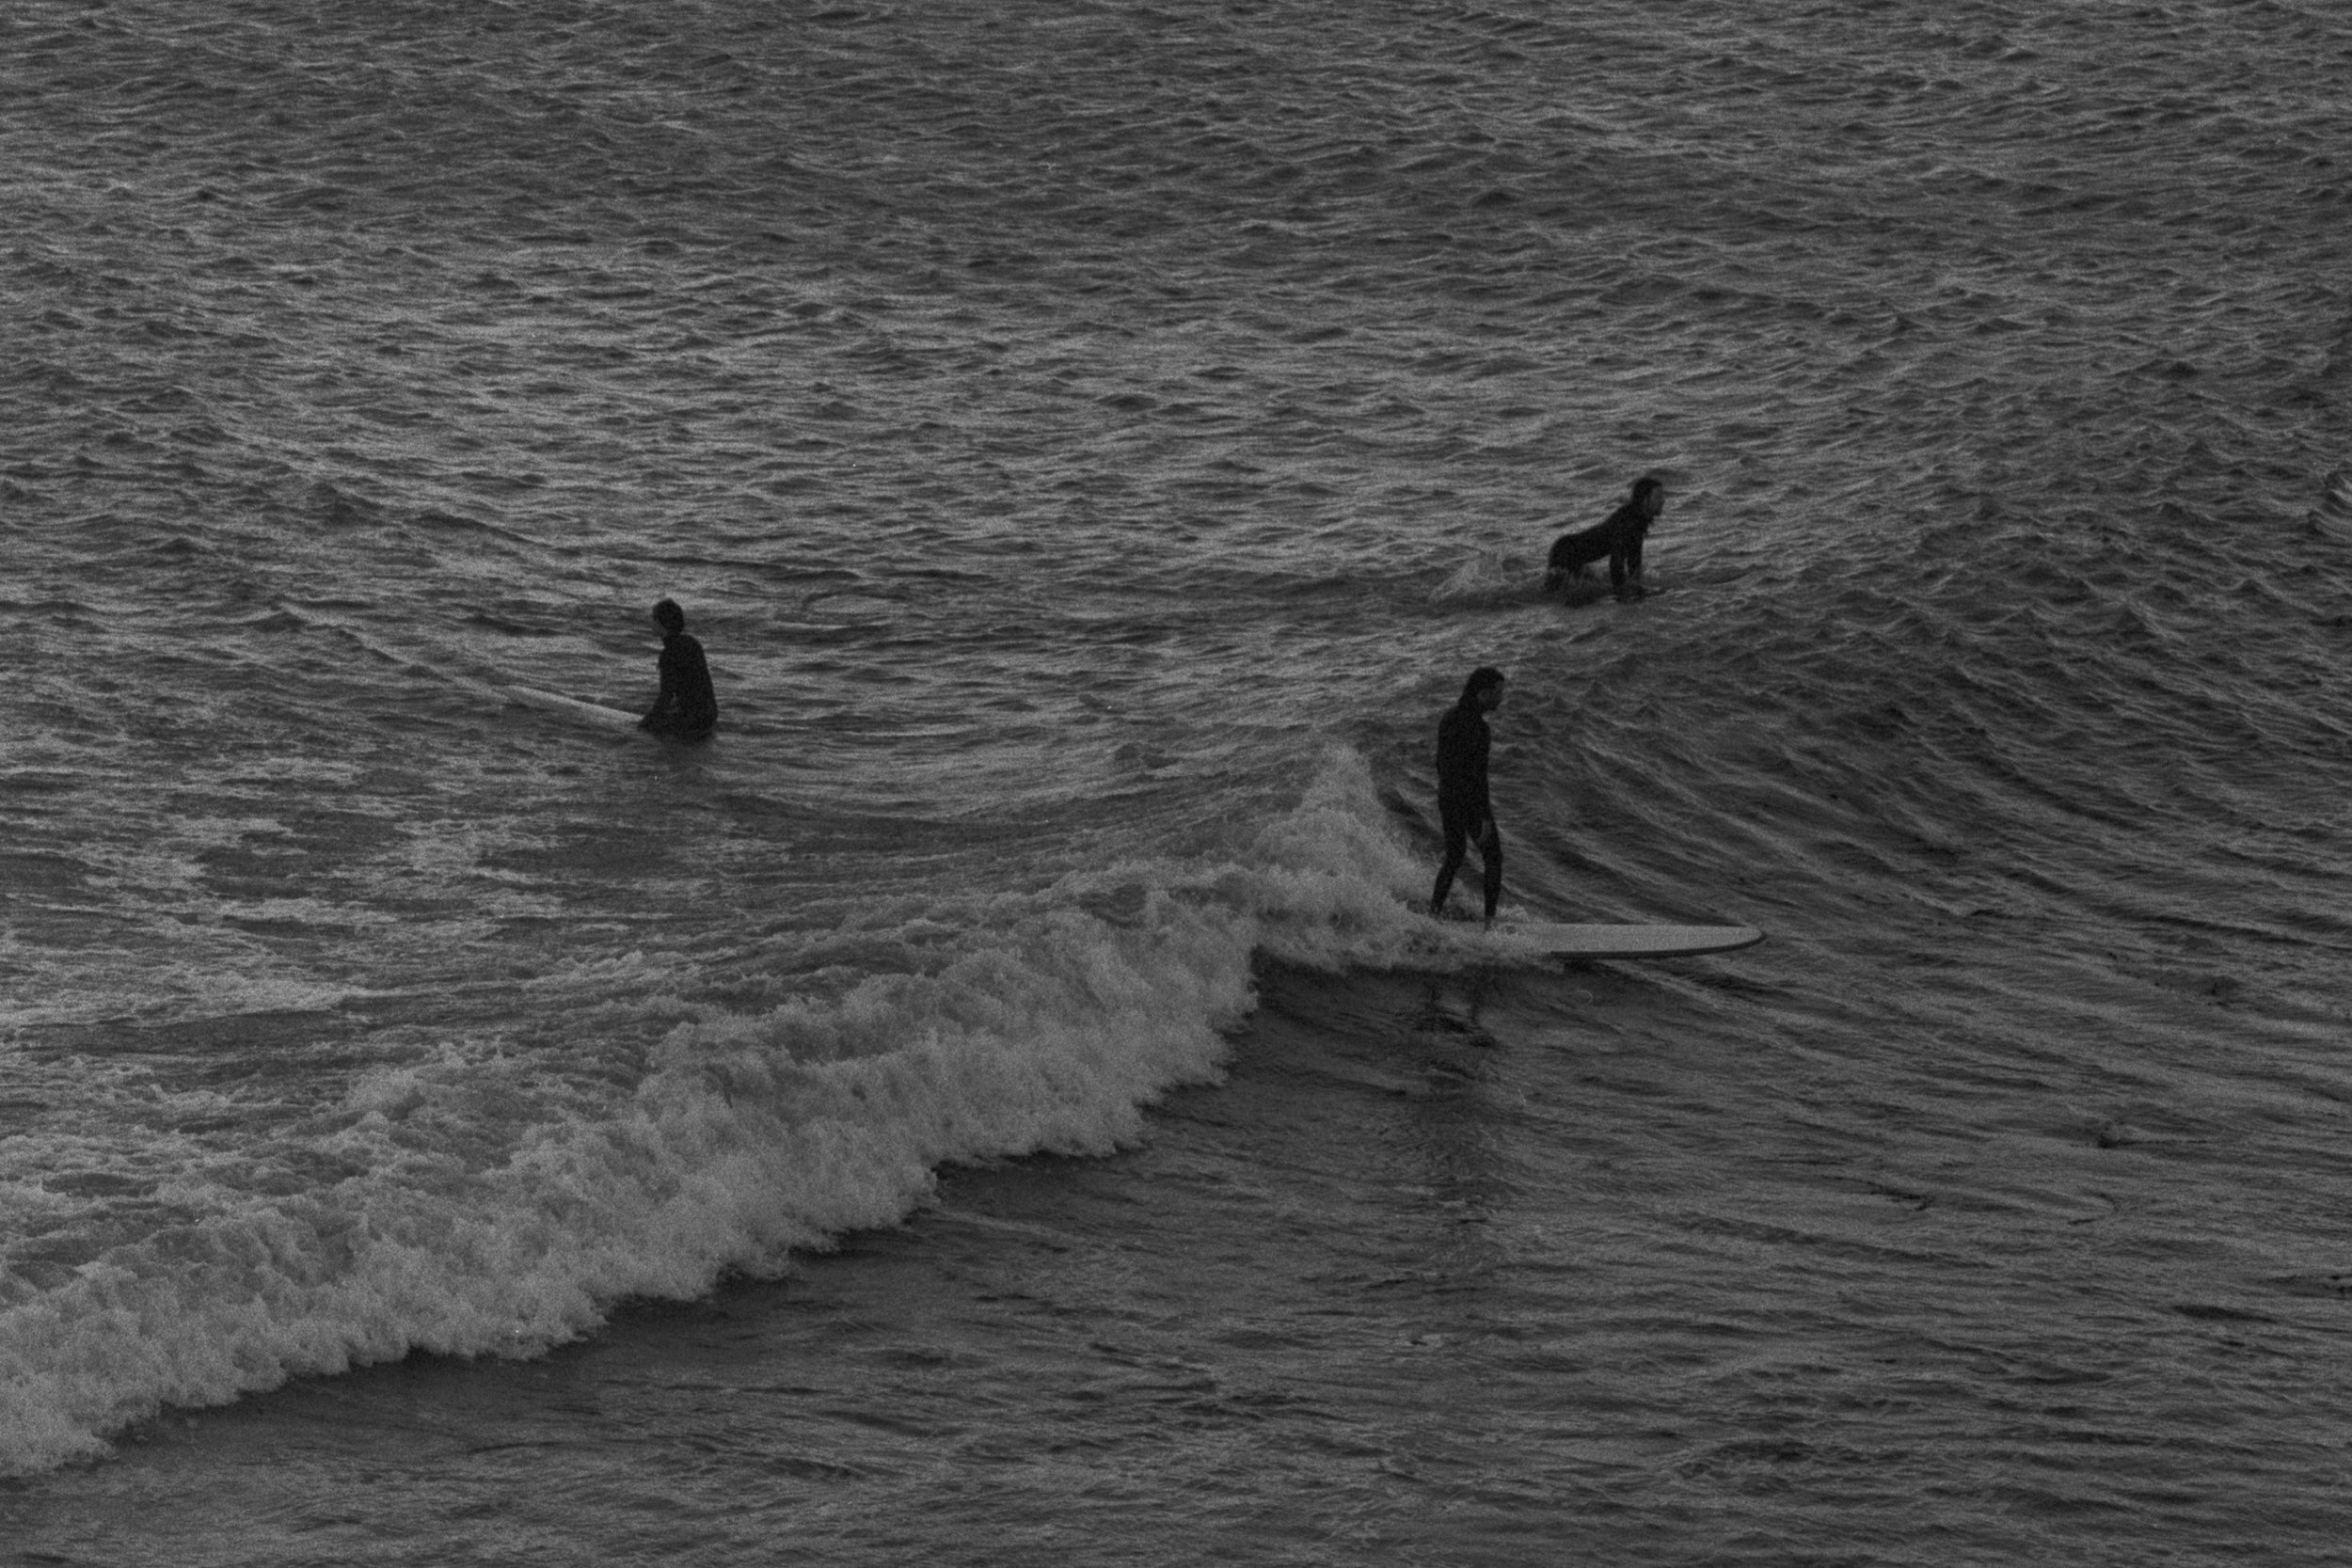 Surf5.jpg